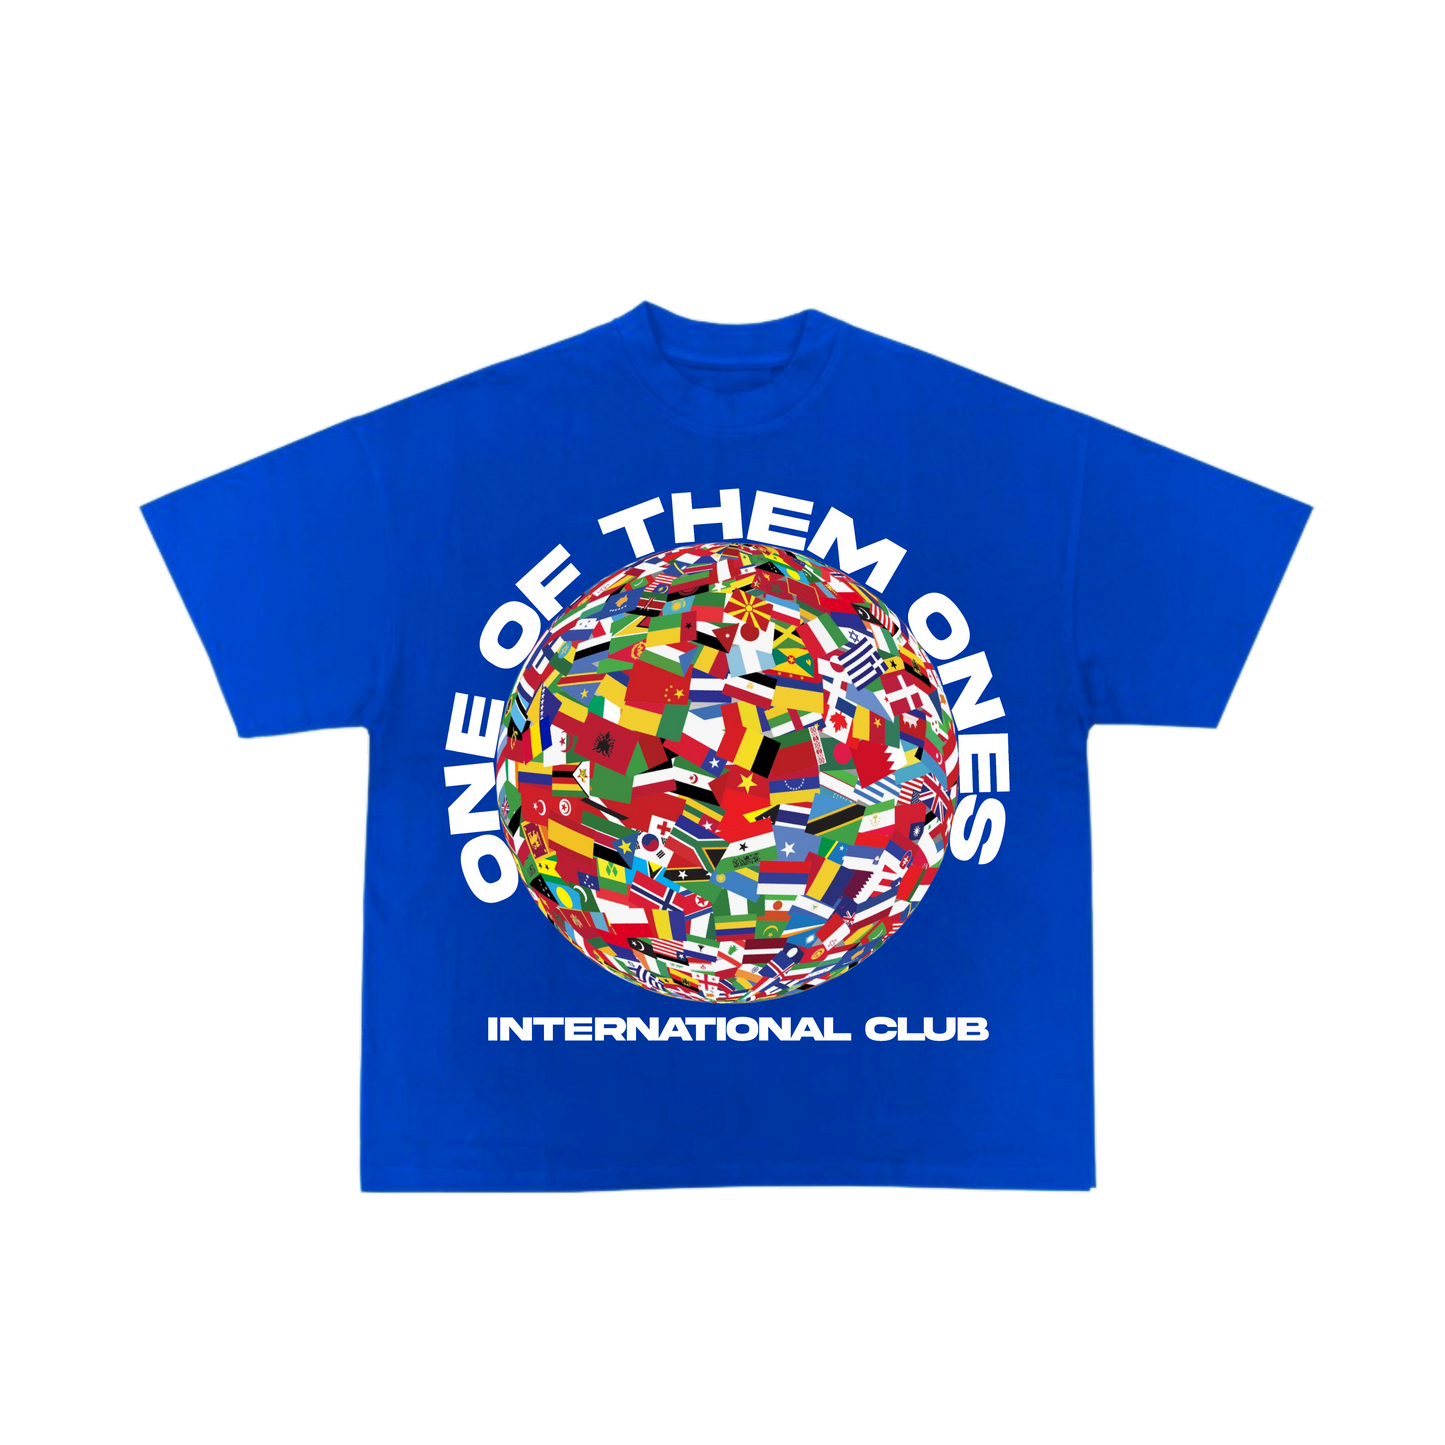 Organik Lyfestyle - 1OFTHEM1's International Club - Blue T-Shirt